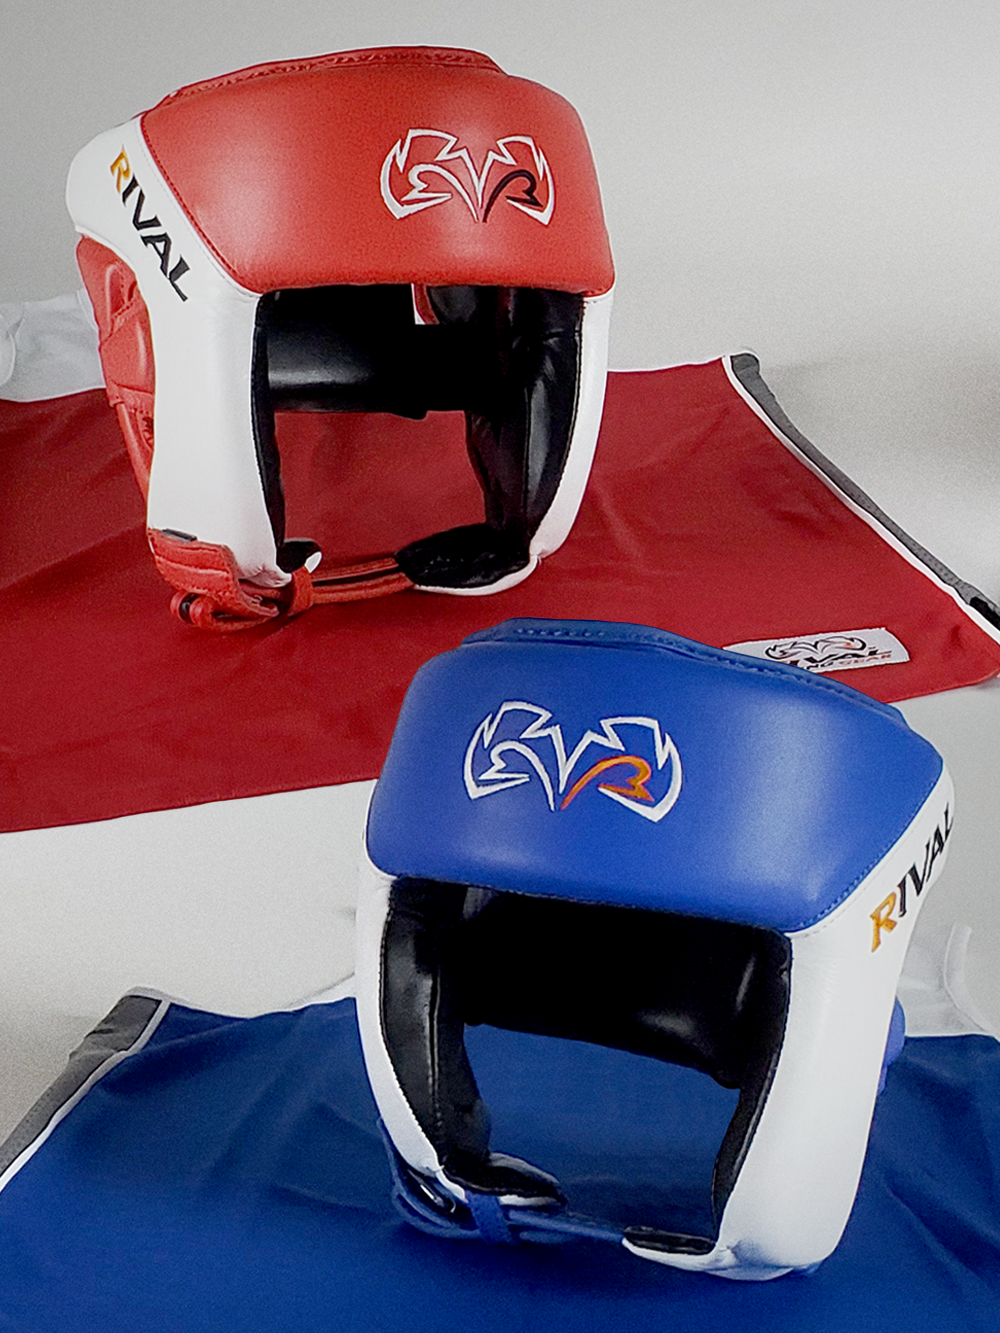 Rival Boxing Gear - Rival headgear